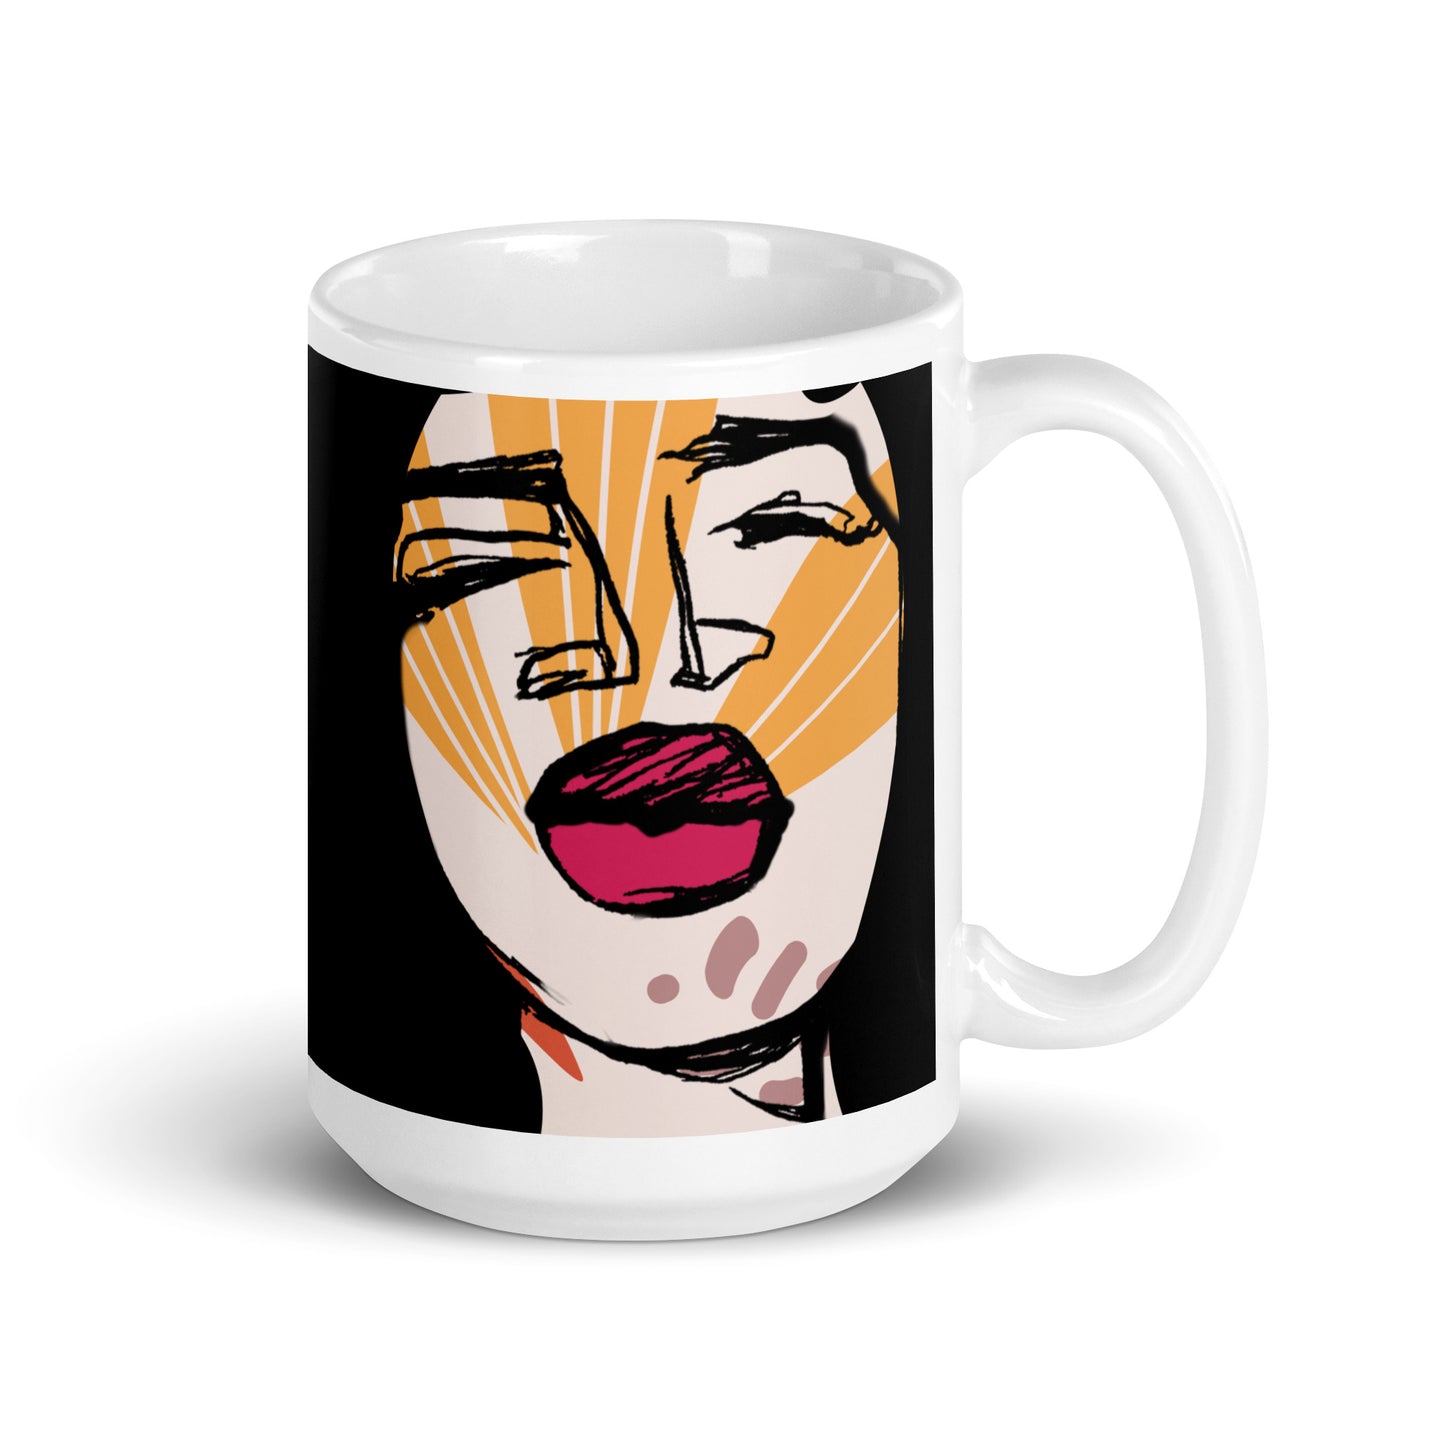 Day Dreamer glossy mug